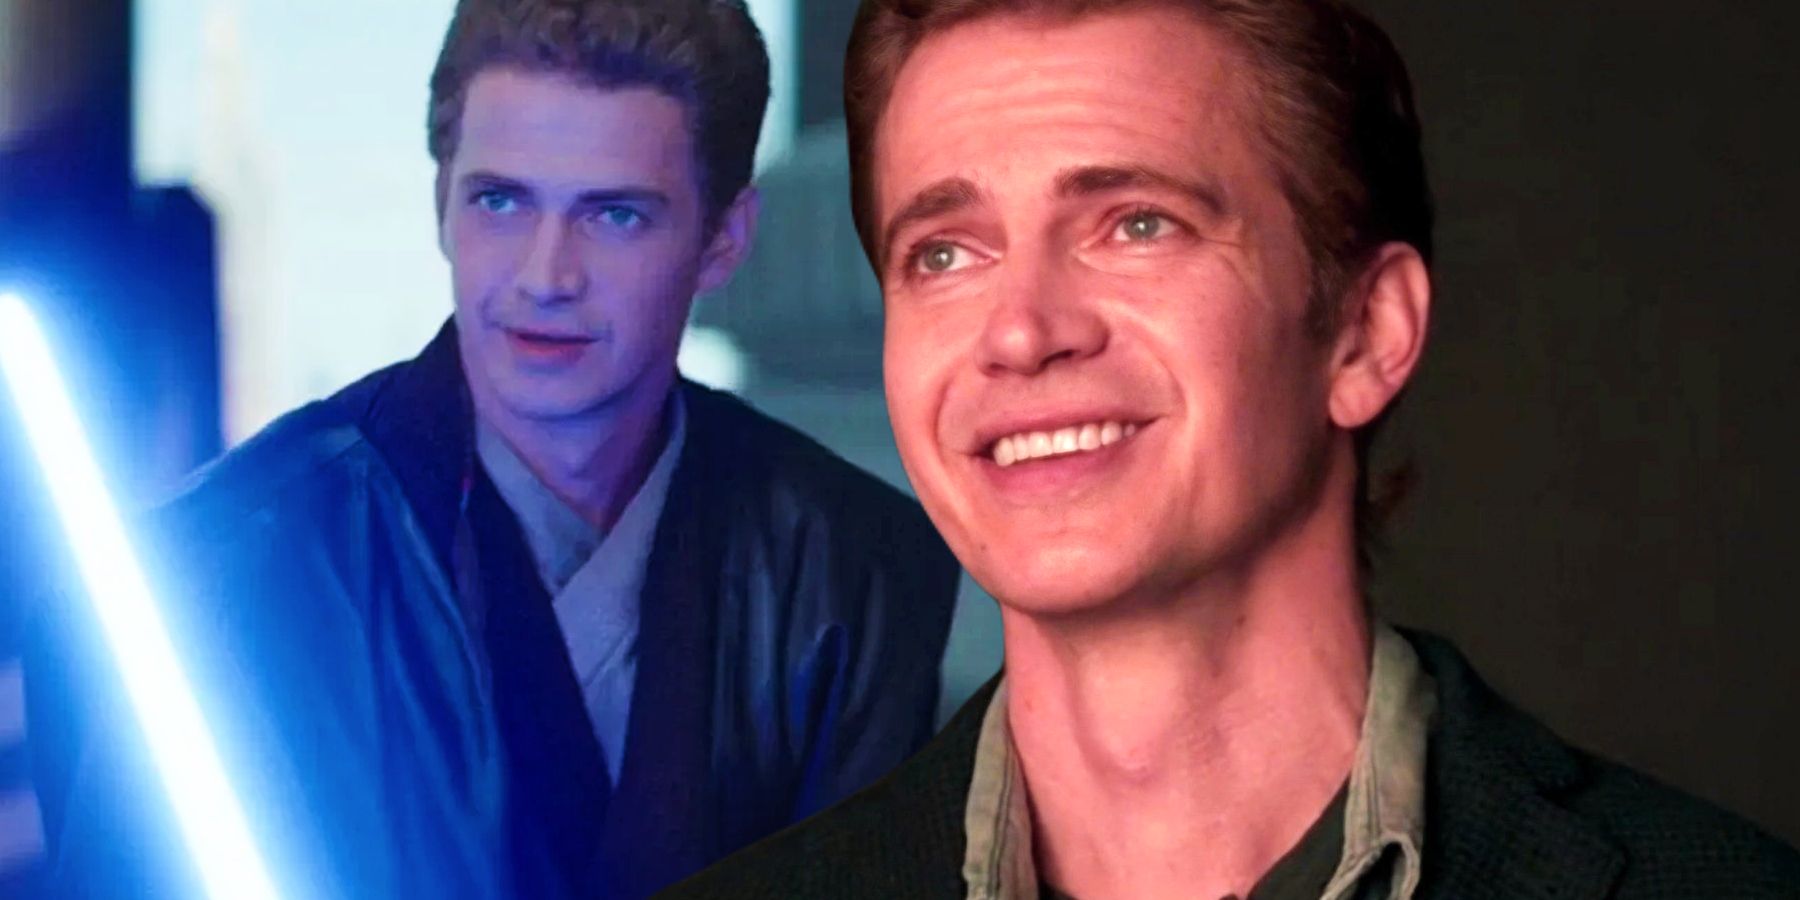 Hayden Christensen as Anakin Skywalker in Obi-Wan Kenobi wielding a lightsaber to the left and Hayden Christensen smiling to the right